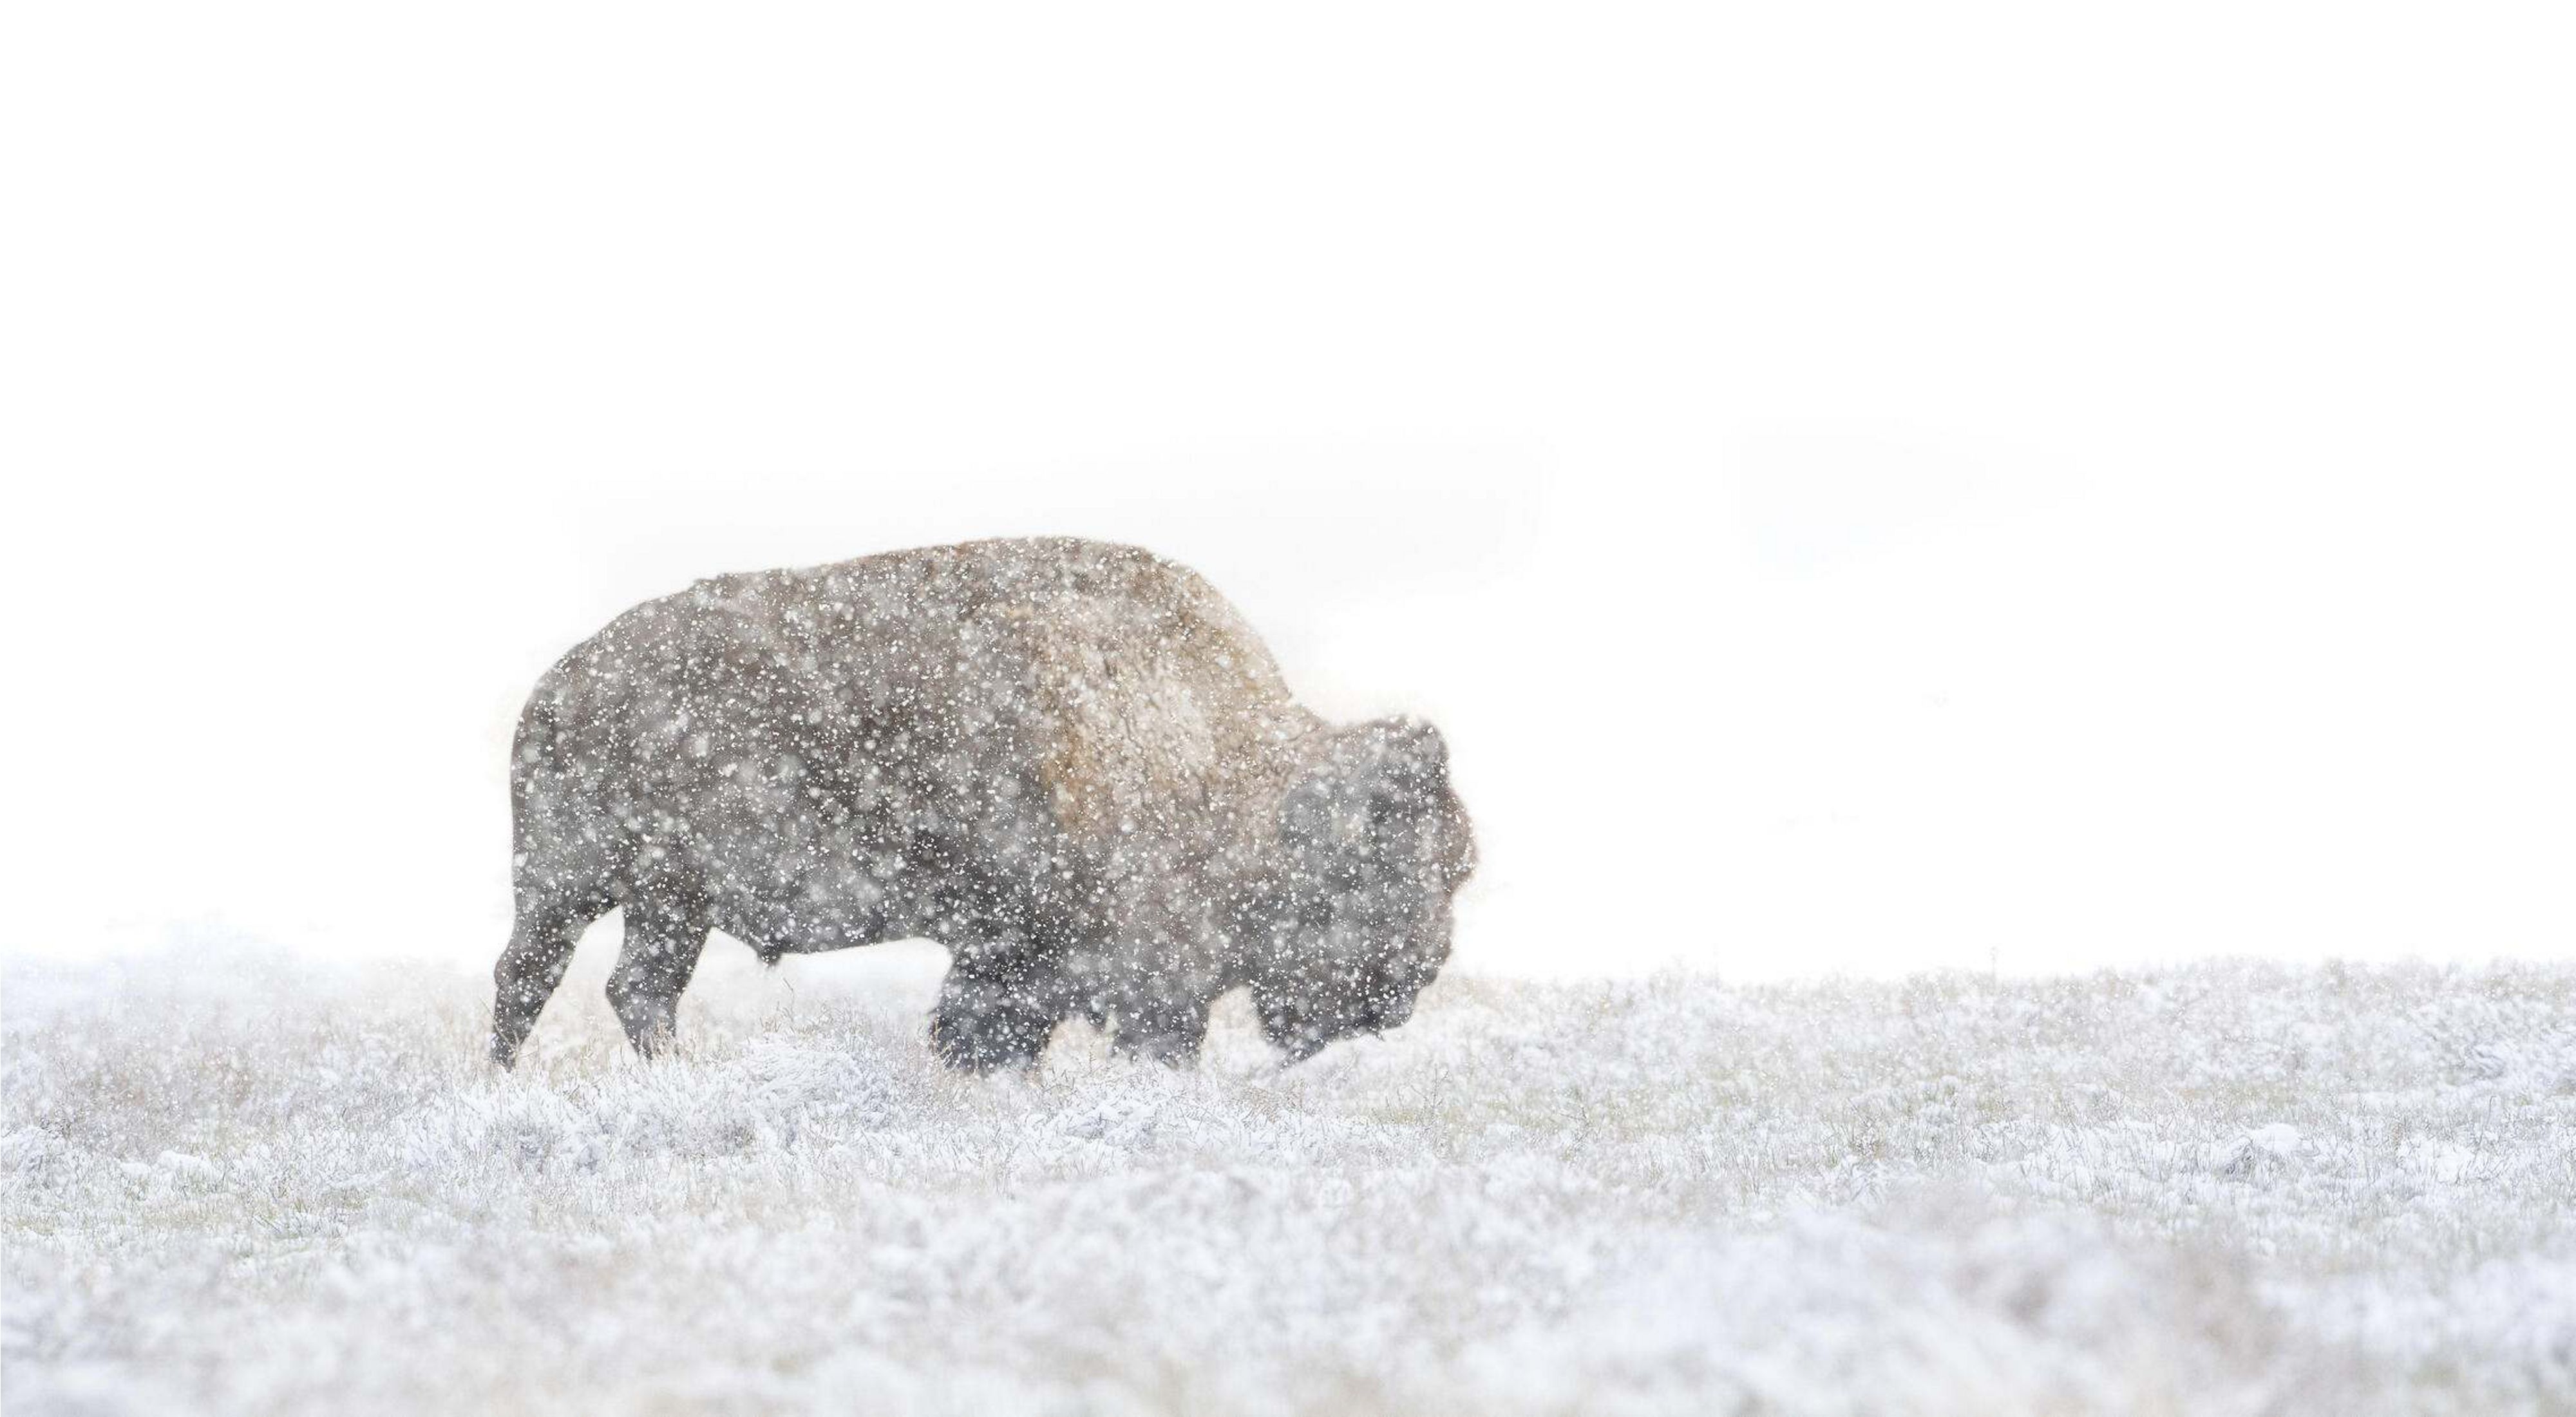 A bison walking through a snowstorm.